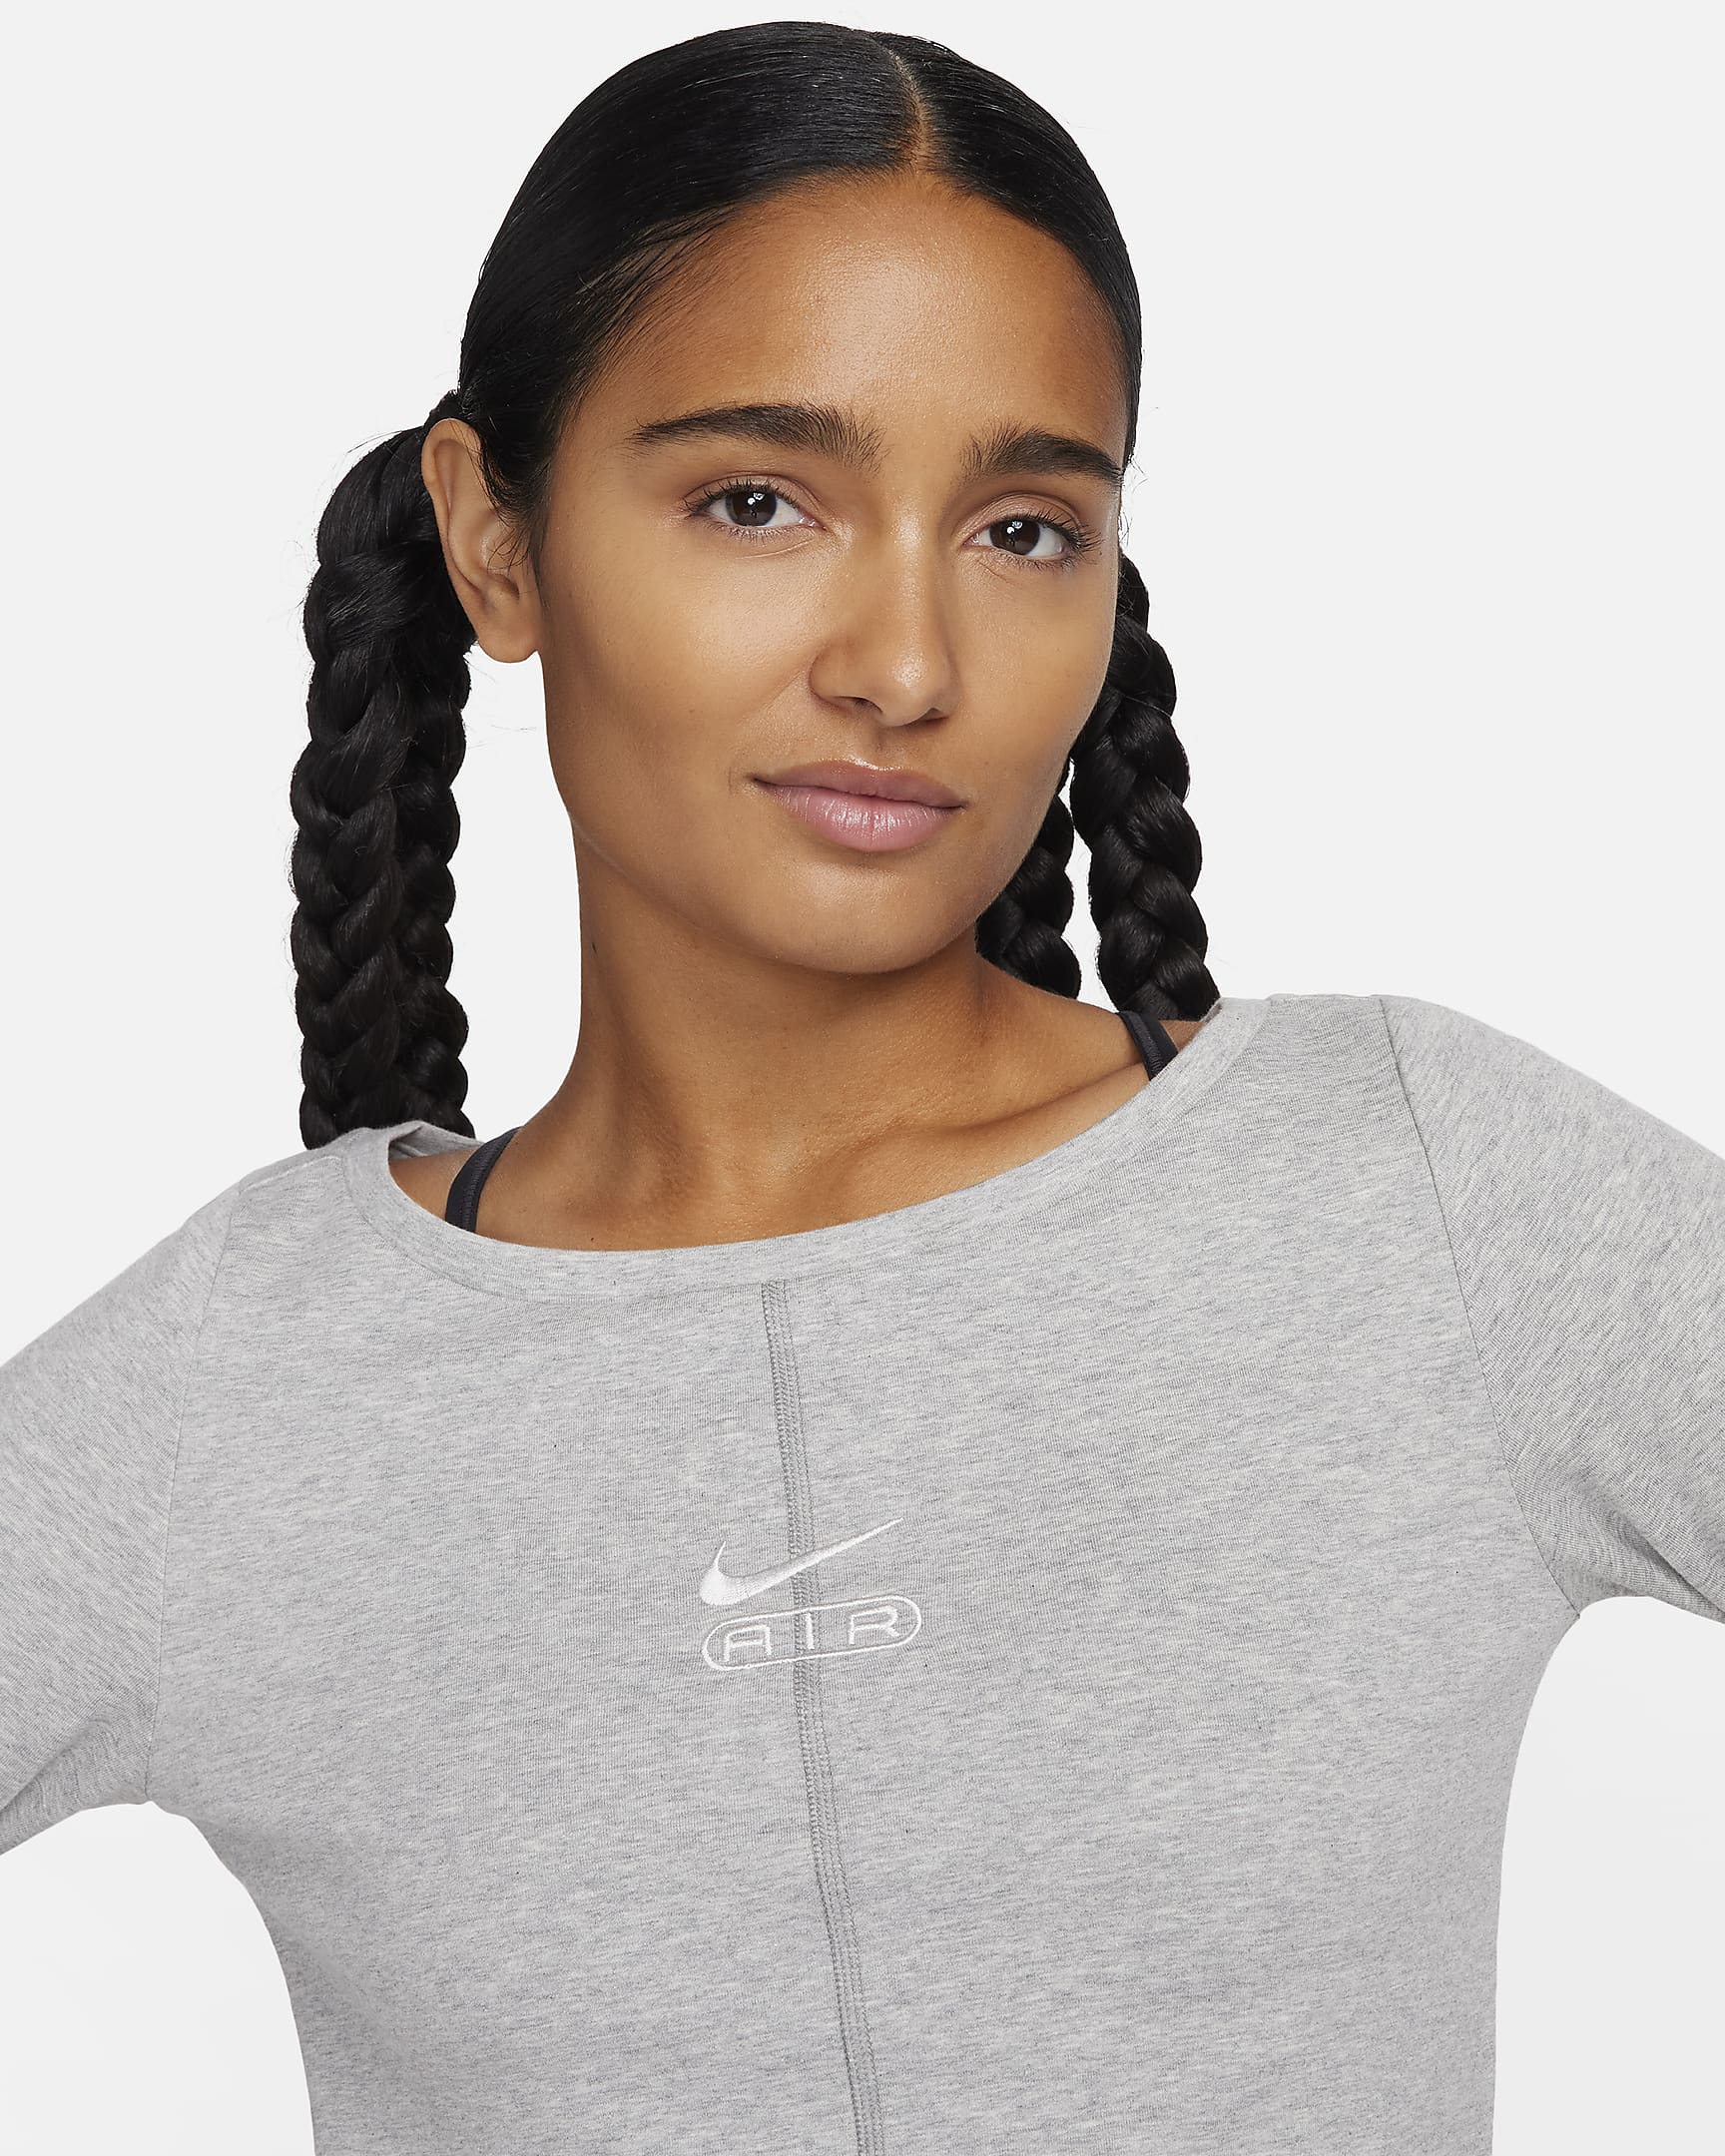 Nike Air Women's Long-Sleeve Top. Nike.com